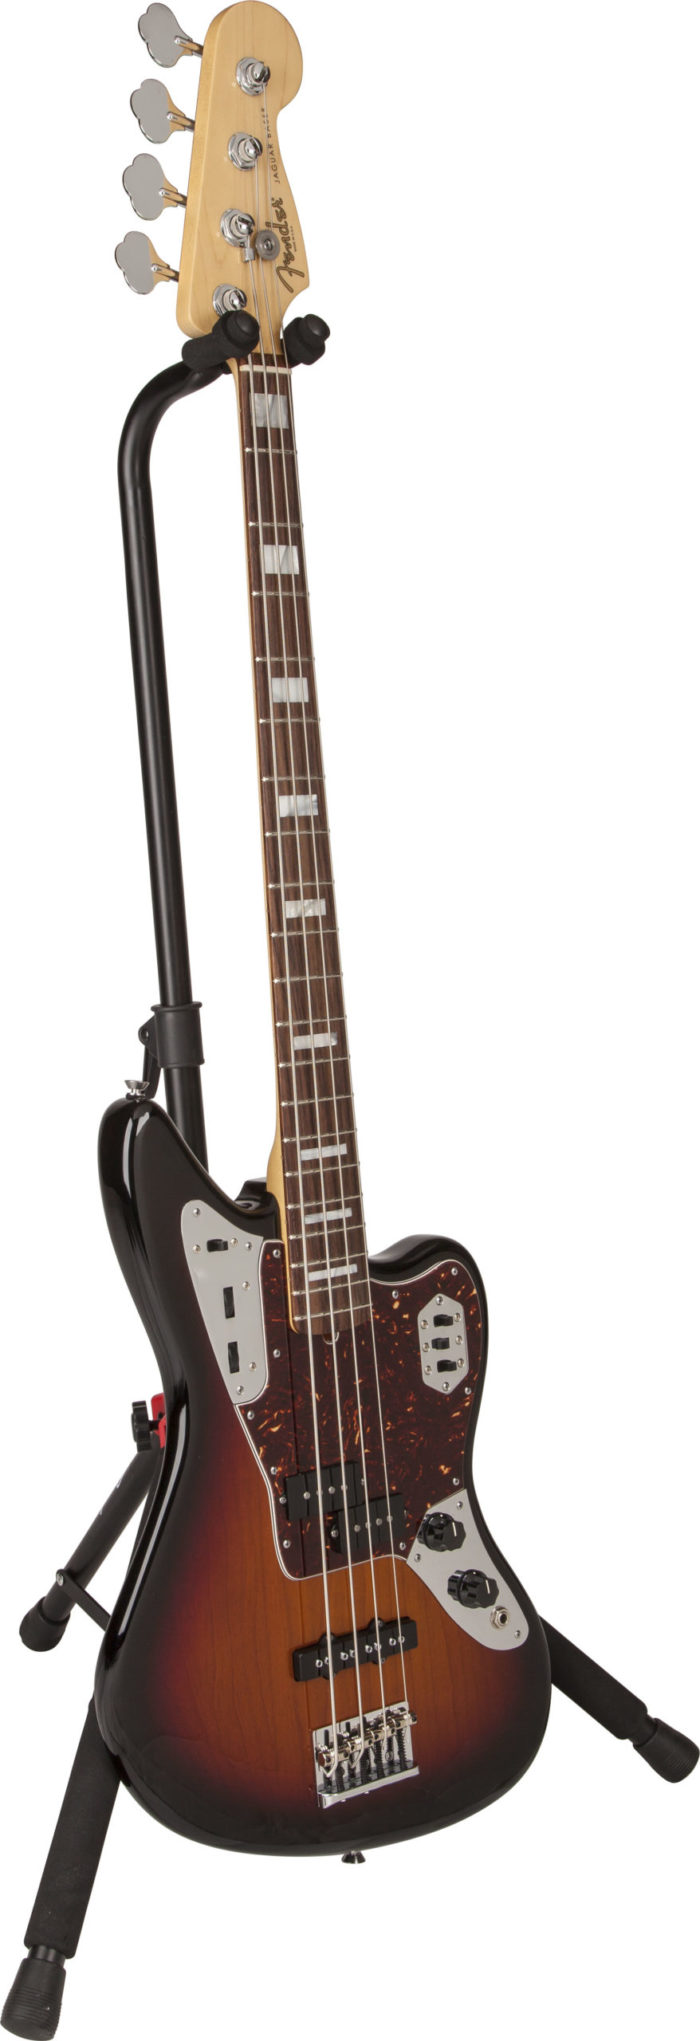 Fender Deluxe Hanging Guitar Stand